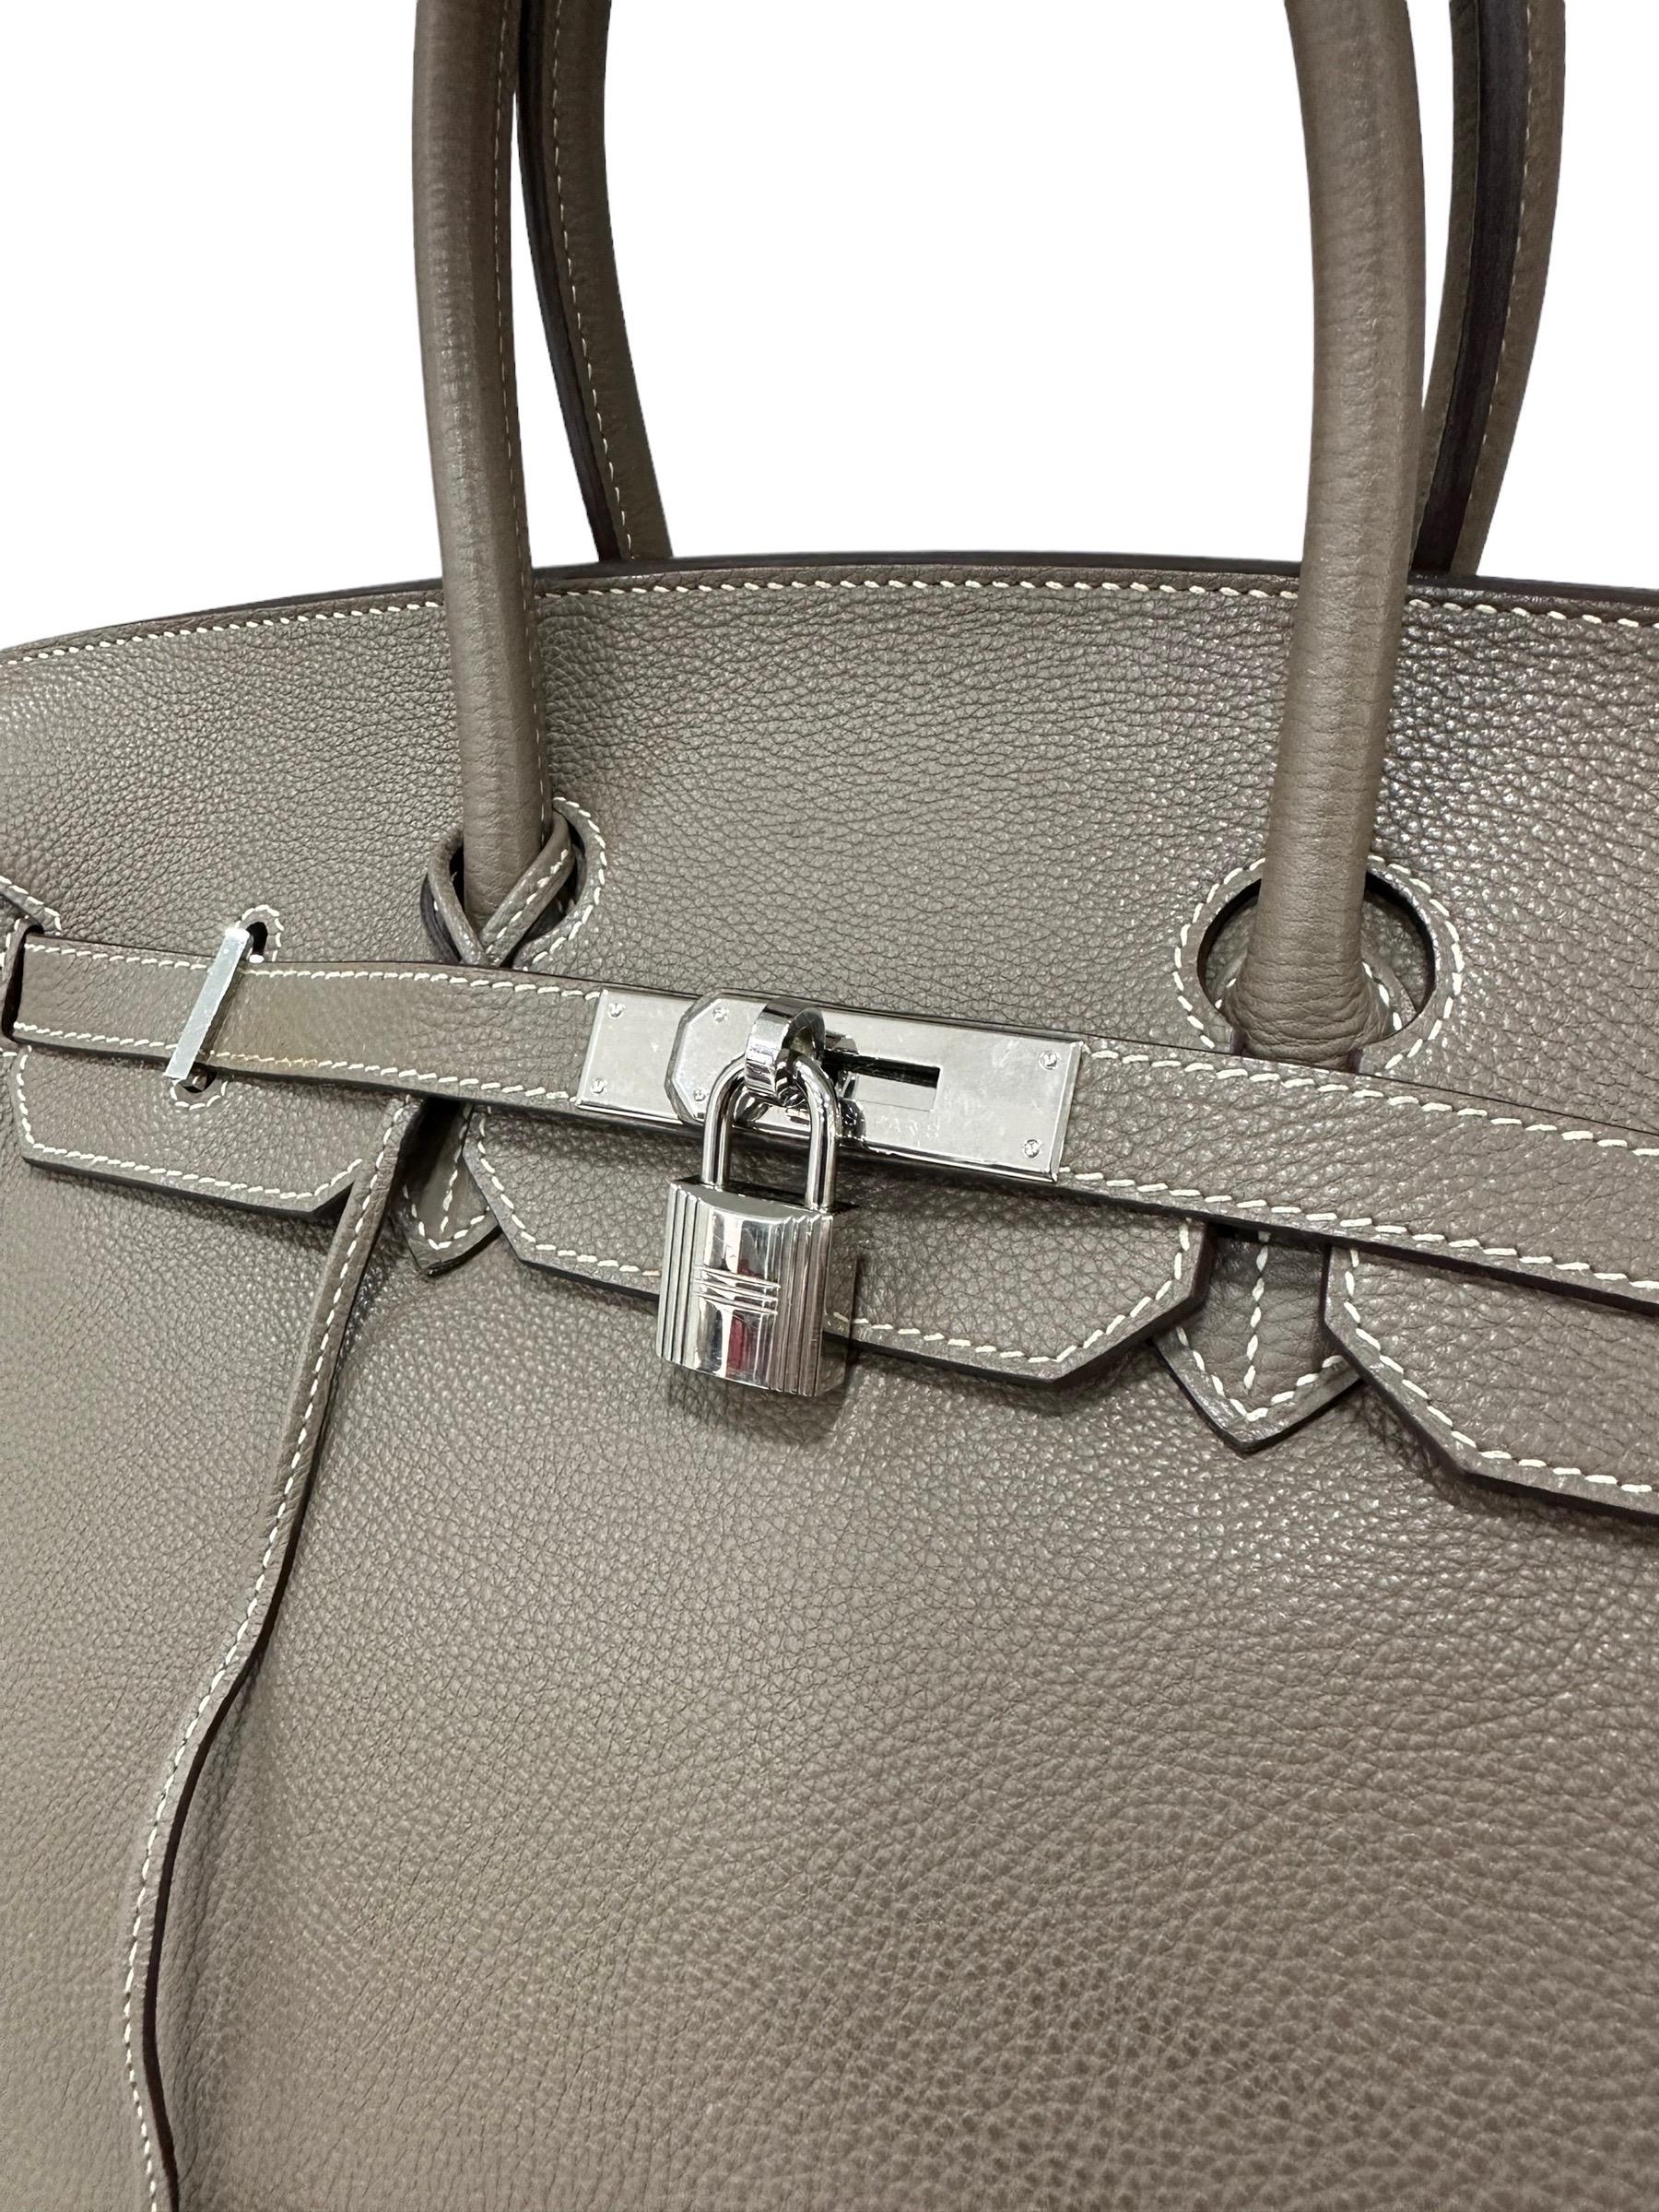 2008 Hermès Birkin 35 Togo Leather Toundra Top Handle Bag For Sale 7